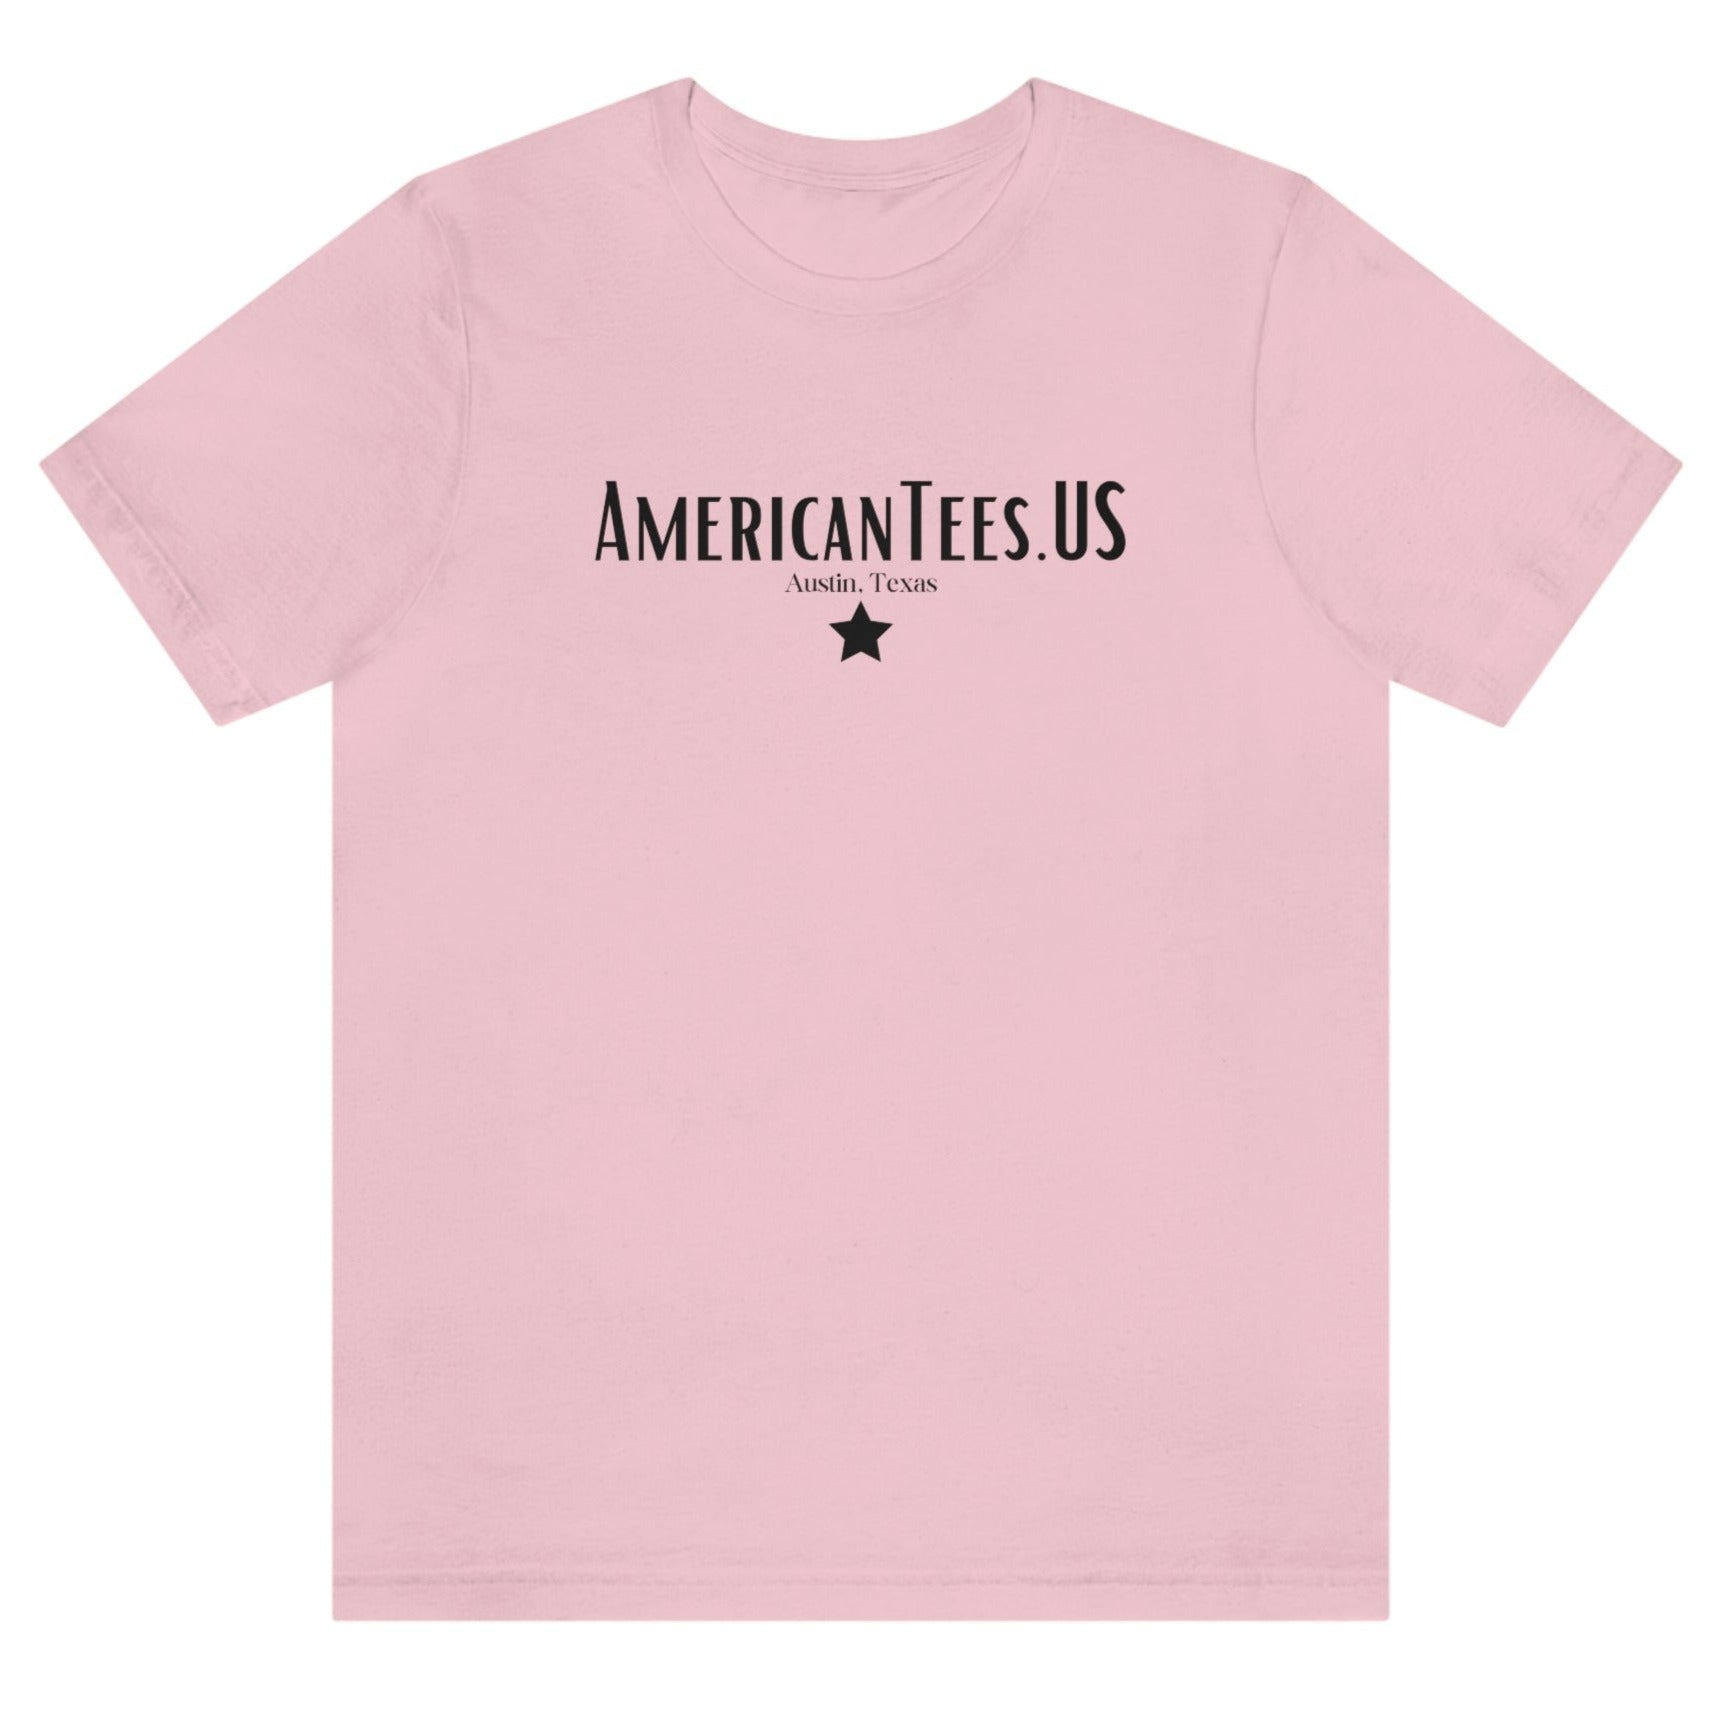 americantees-us-austin-tx-pink-t-shirt-unisex